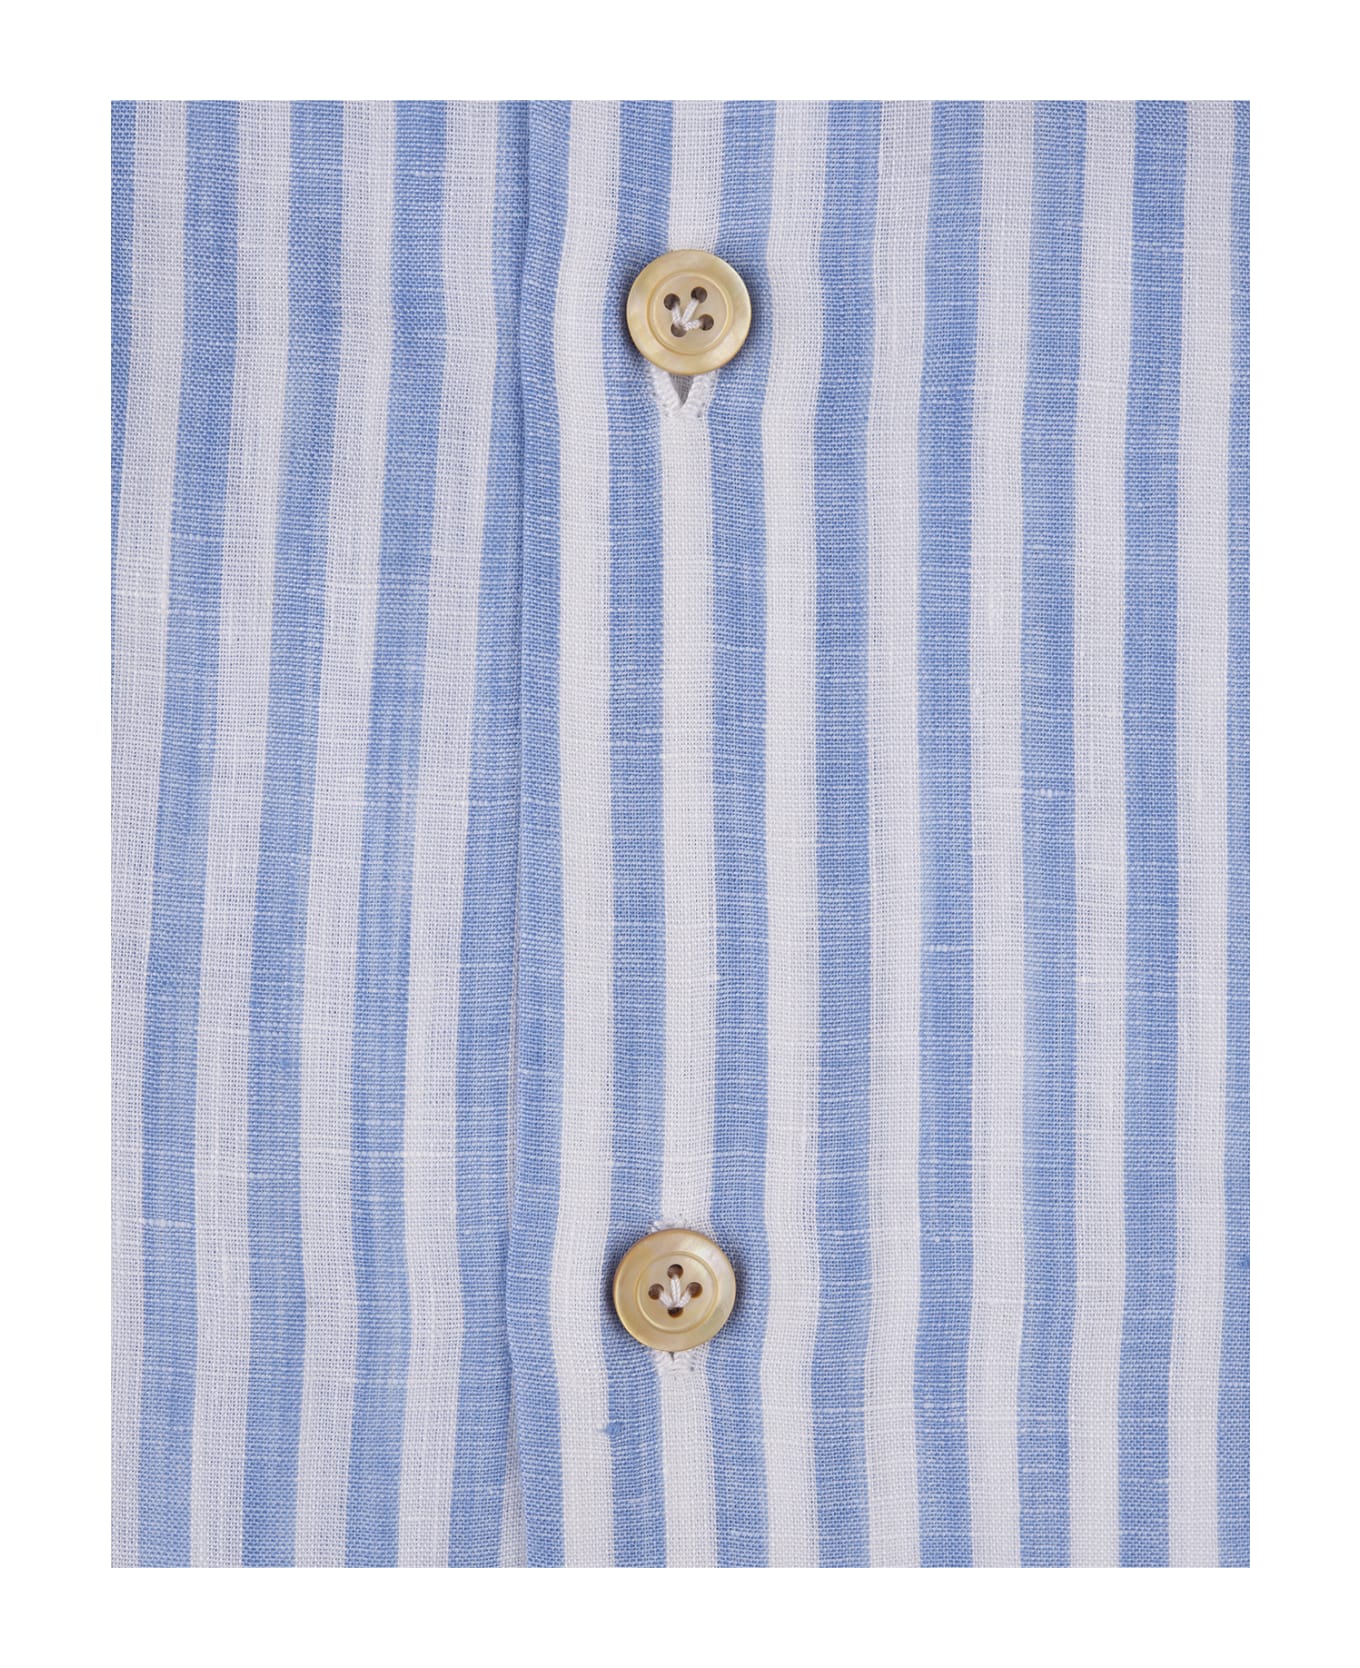 Kiton Light Blue Striped Linen Shirt - Blue